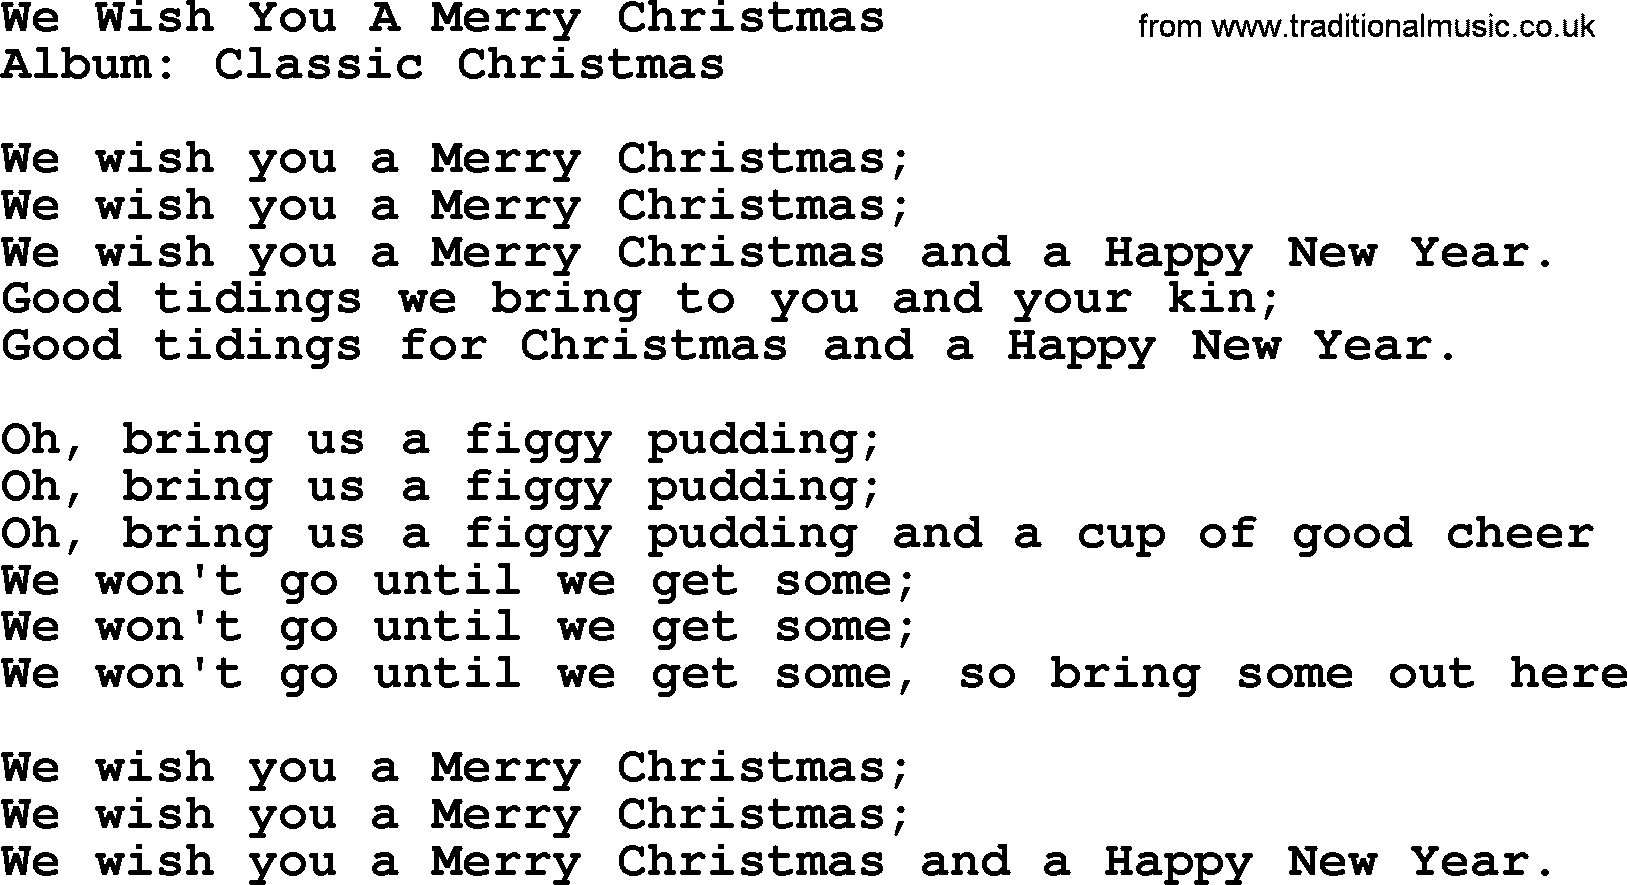 We Wish You A Merry Christmas, by Strait lyrics